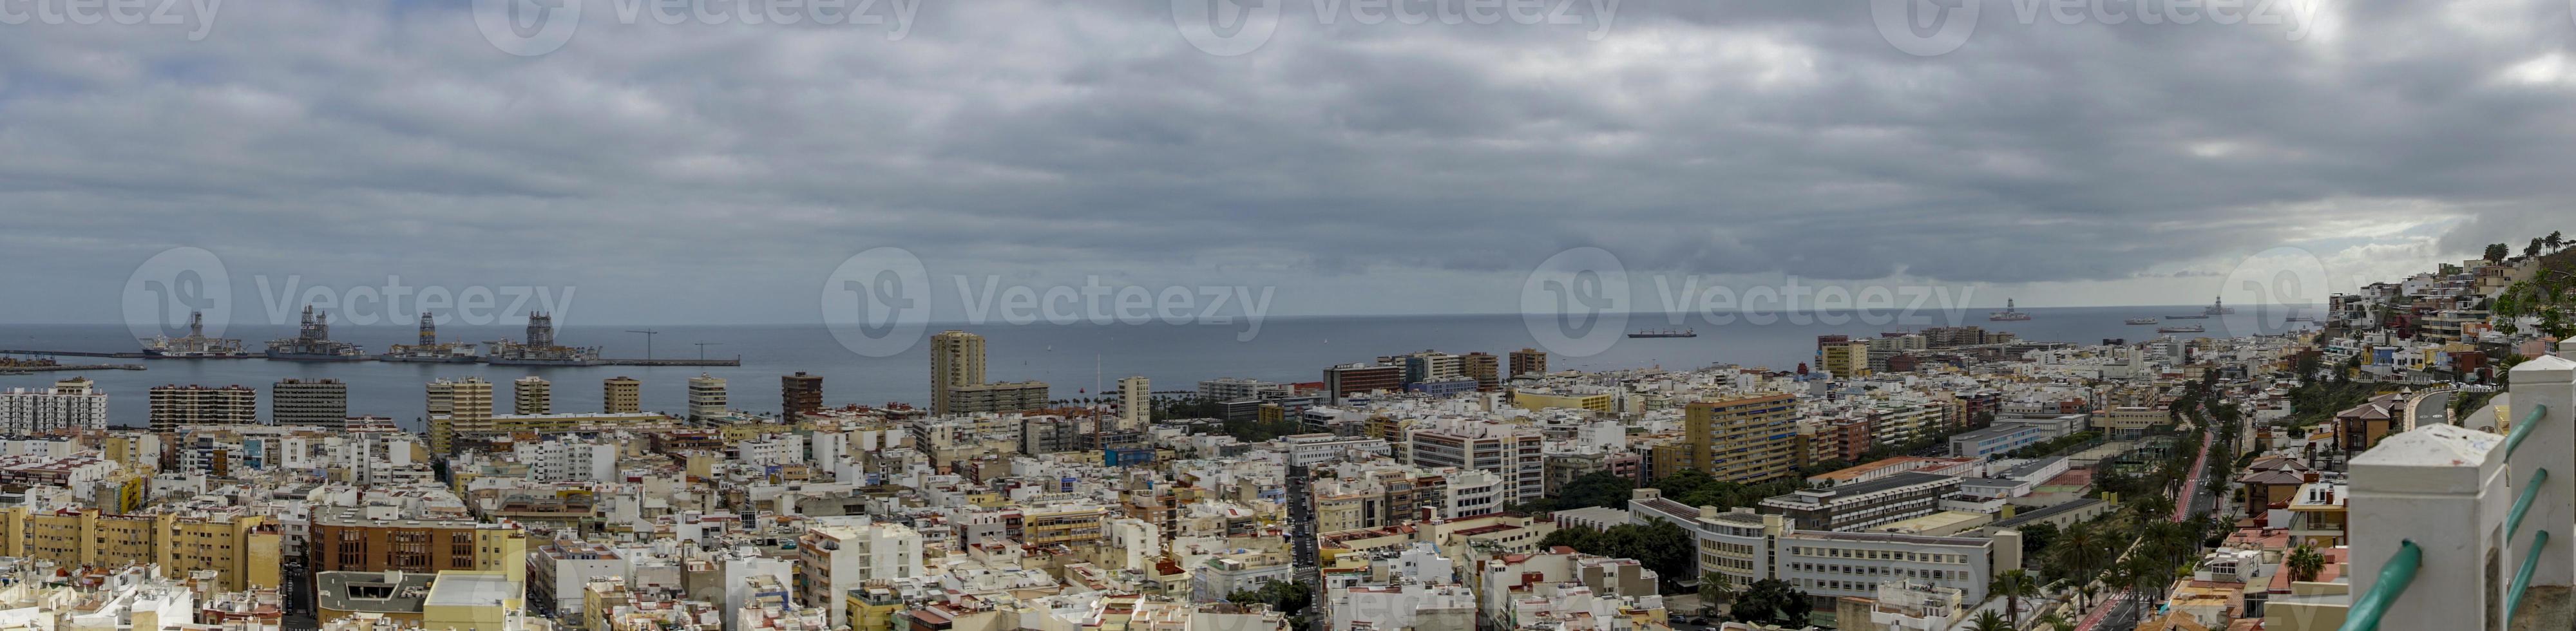 Las Palmas Skyline der Stadt wiew foto